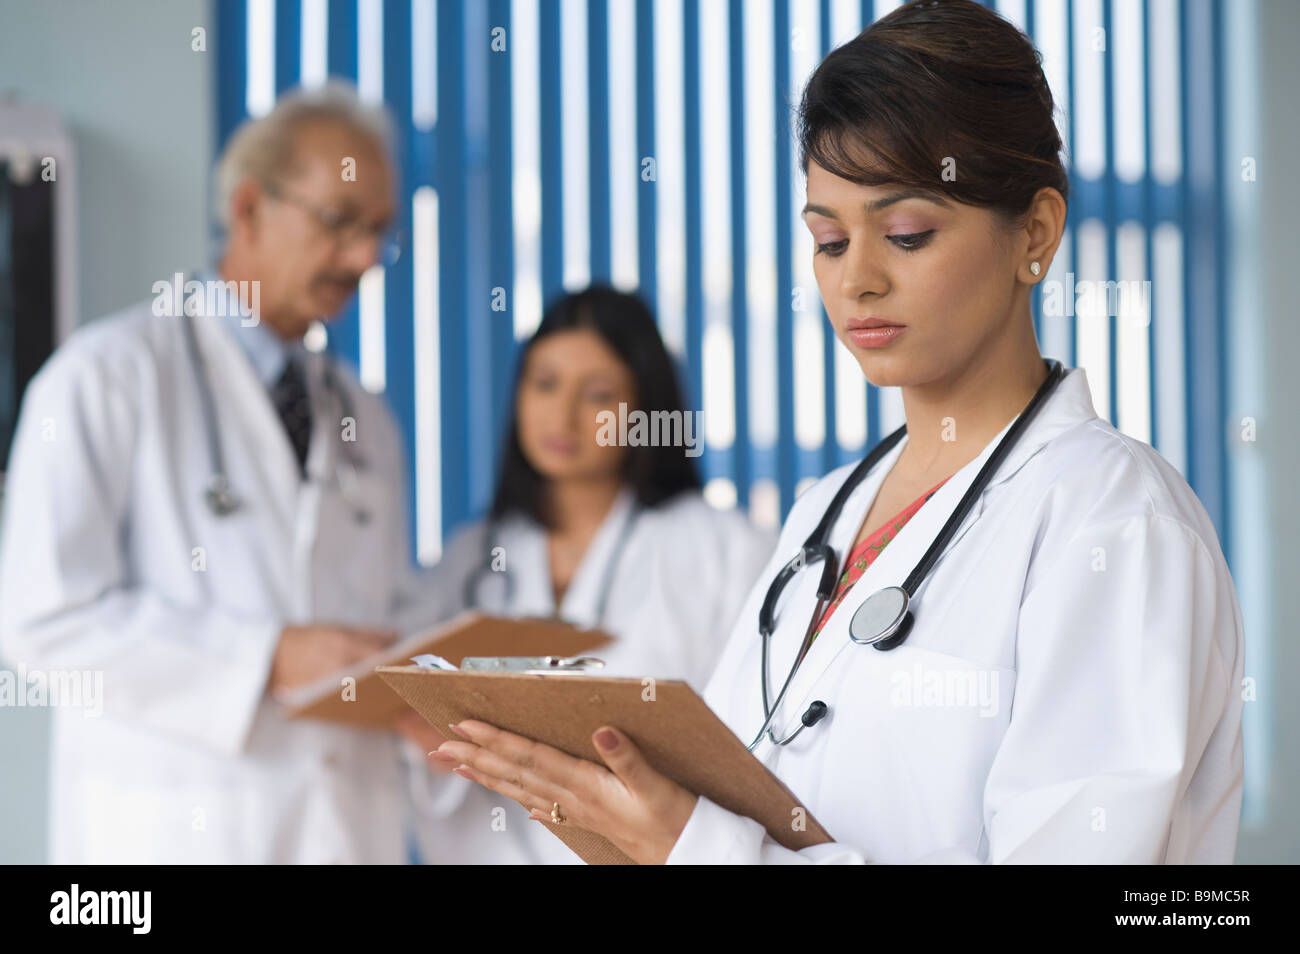 Doctors examining a report Stock Photo